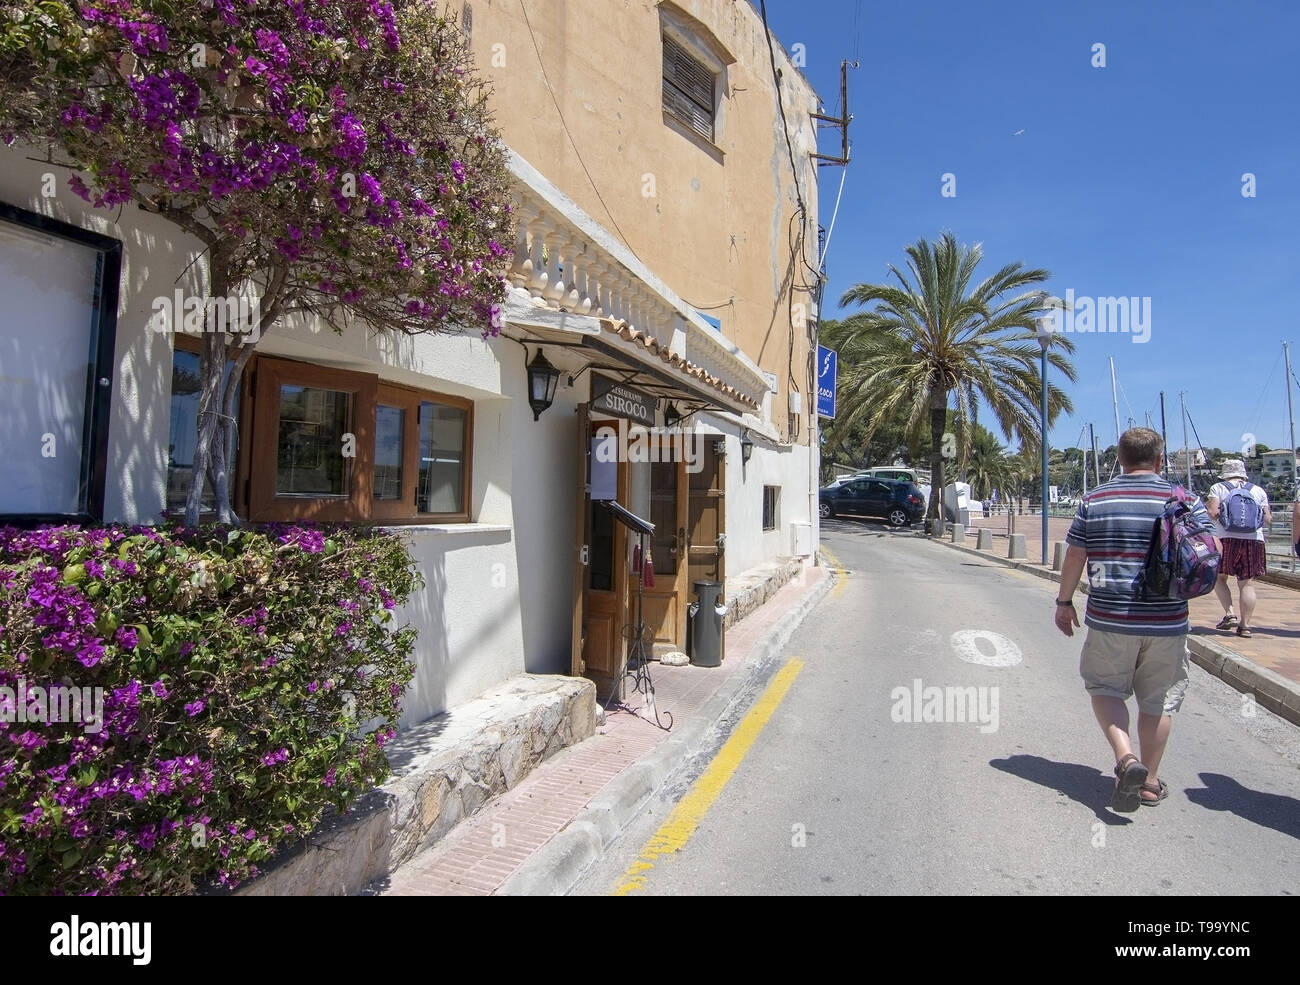 PORTO CRISTO, MALLORCA, SPAIN - MAY 16, 2019: Harbor area restaurant Siroco front on a sunny day on May 16, 2019 in Porto Cristo, Mallorca, Spain. Stock Photo